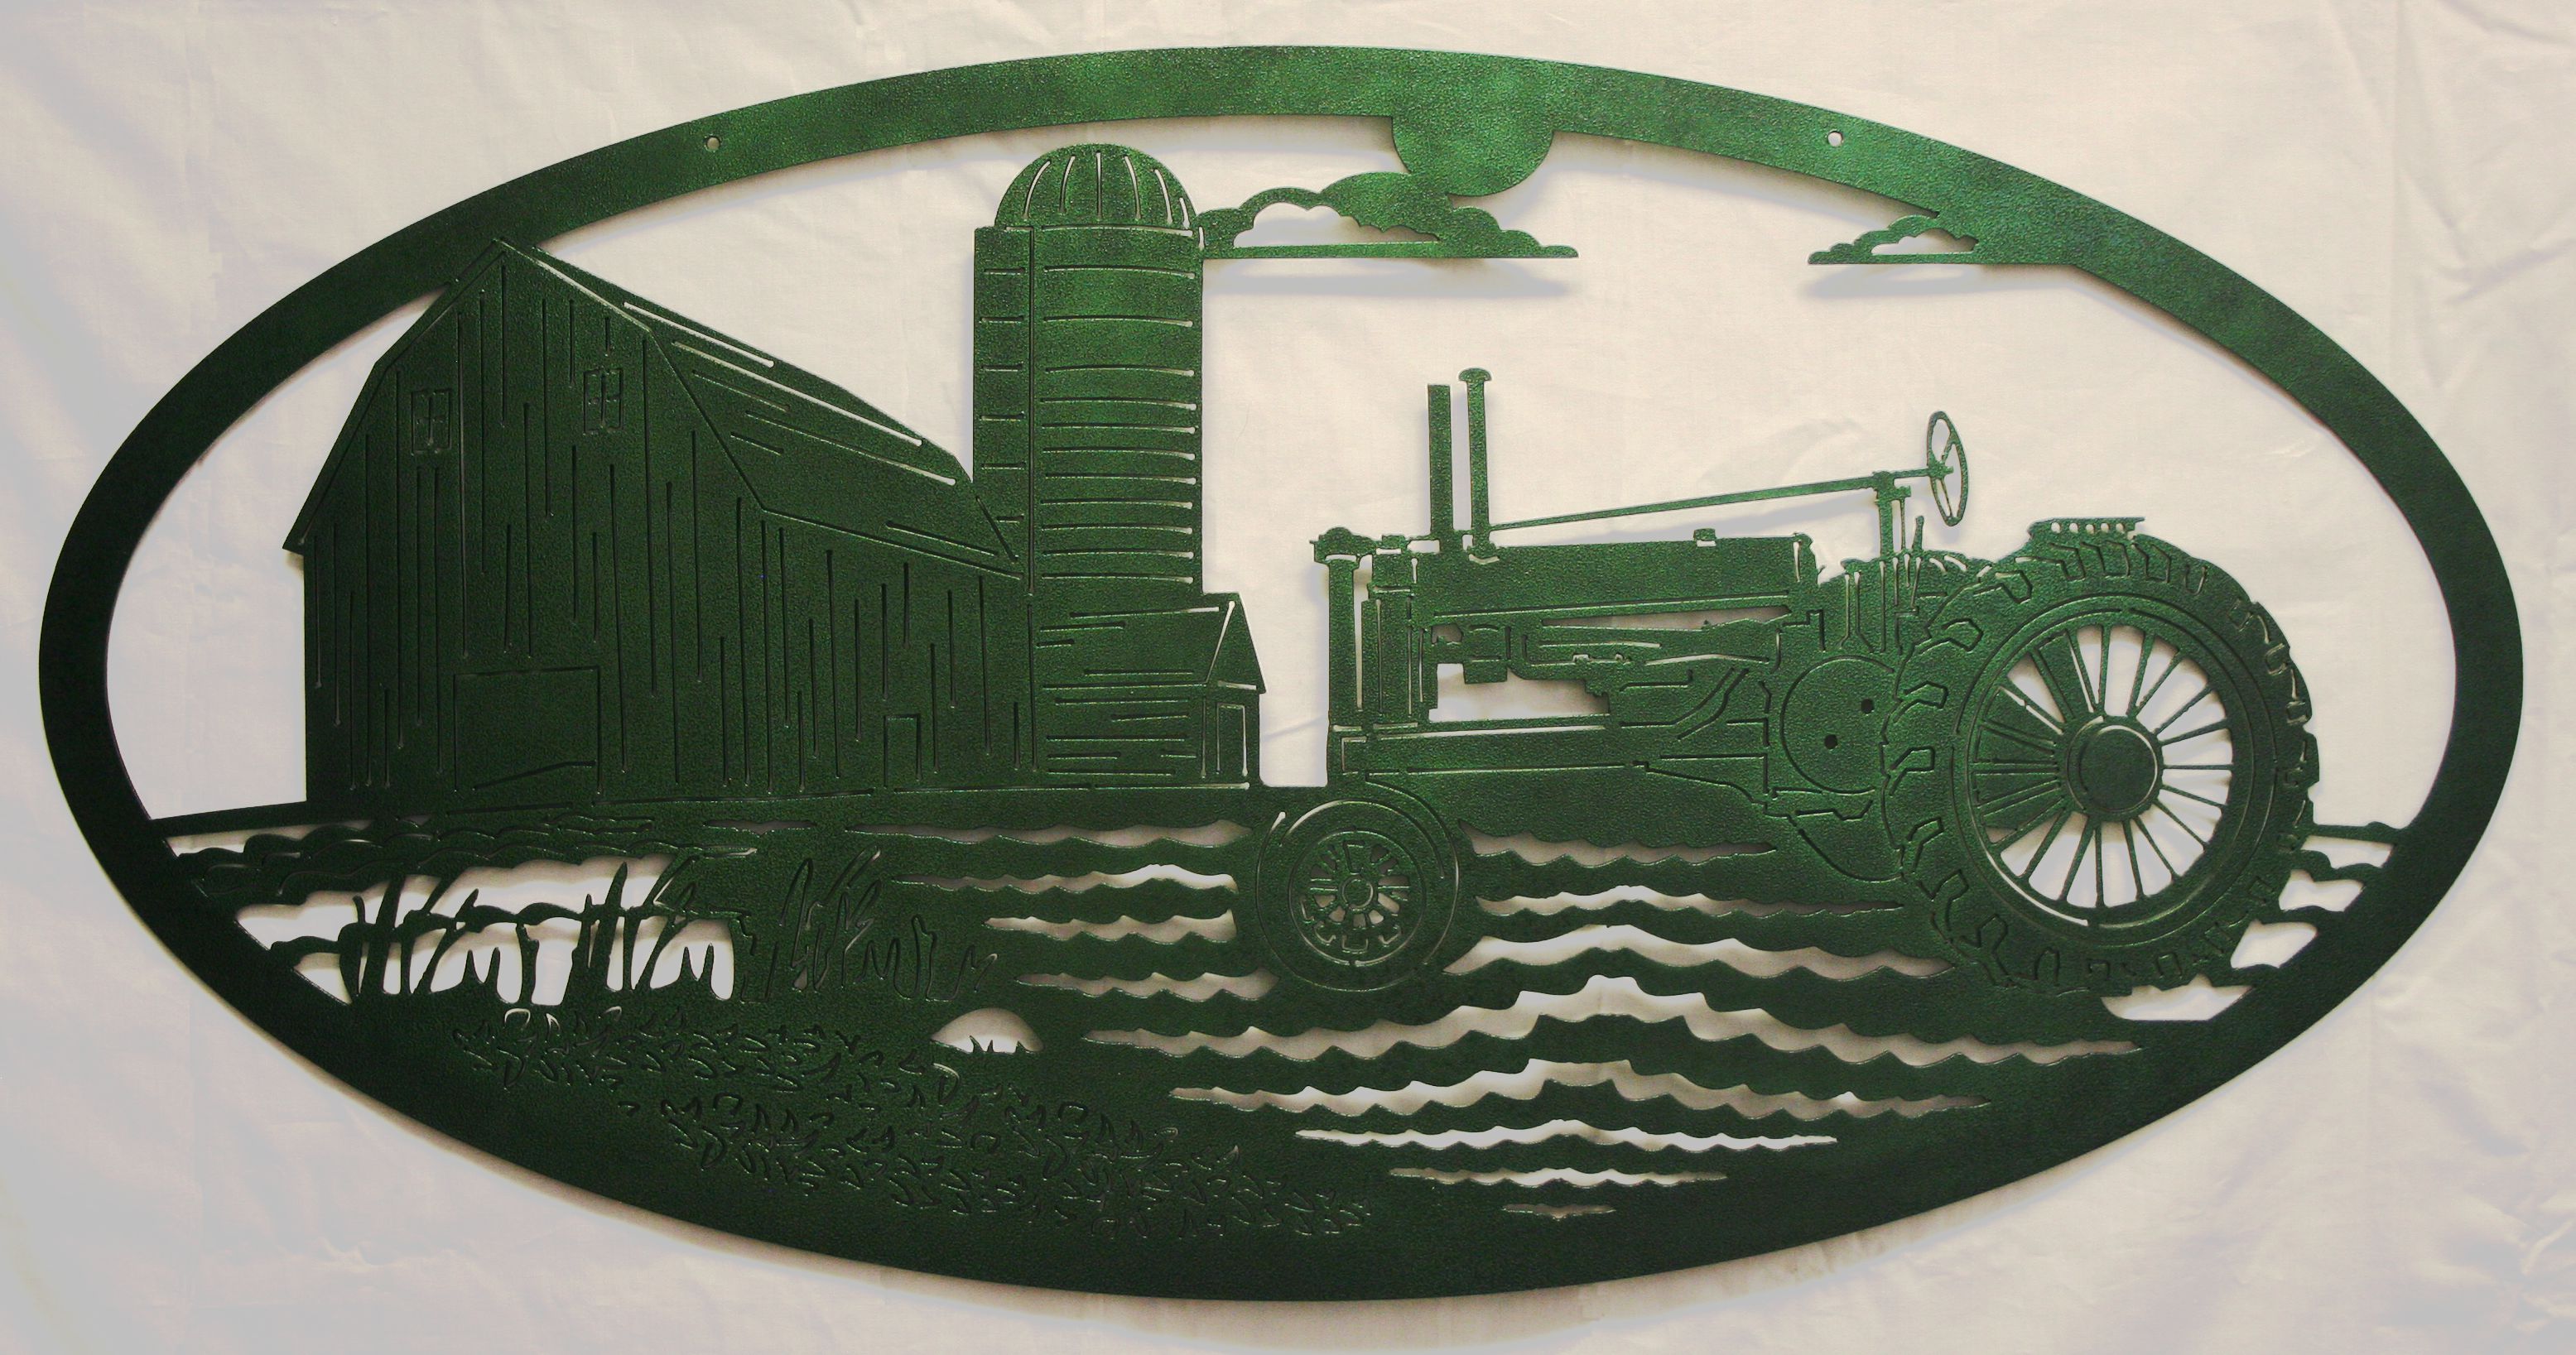 Metal Art, John Deere, Tractor, Field, Barn, Silo, Sun, Clouds, Crop